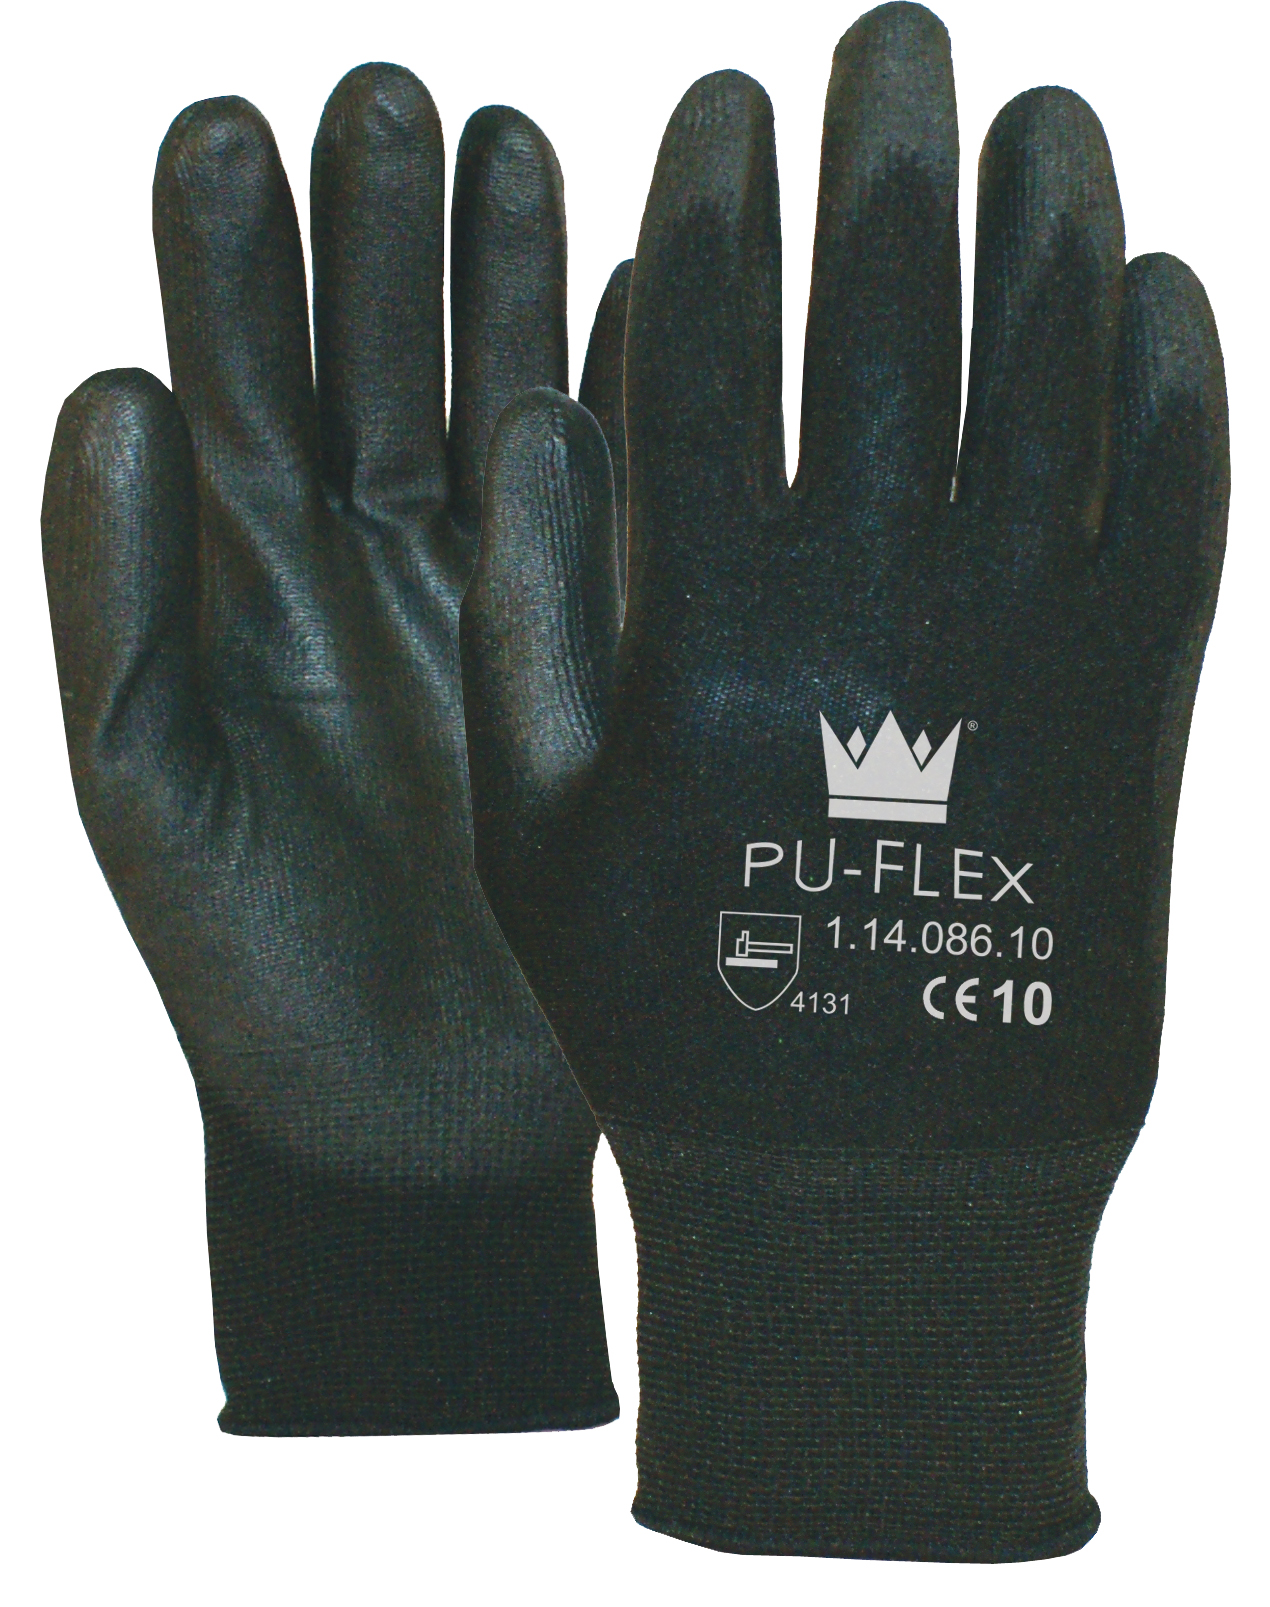 Pu flex handschoenen